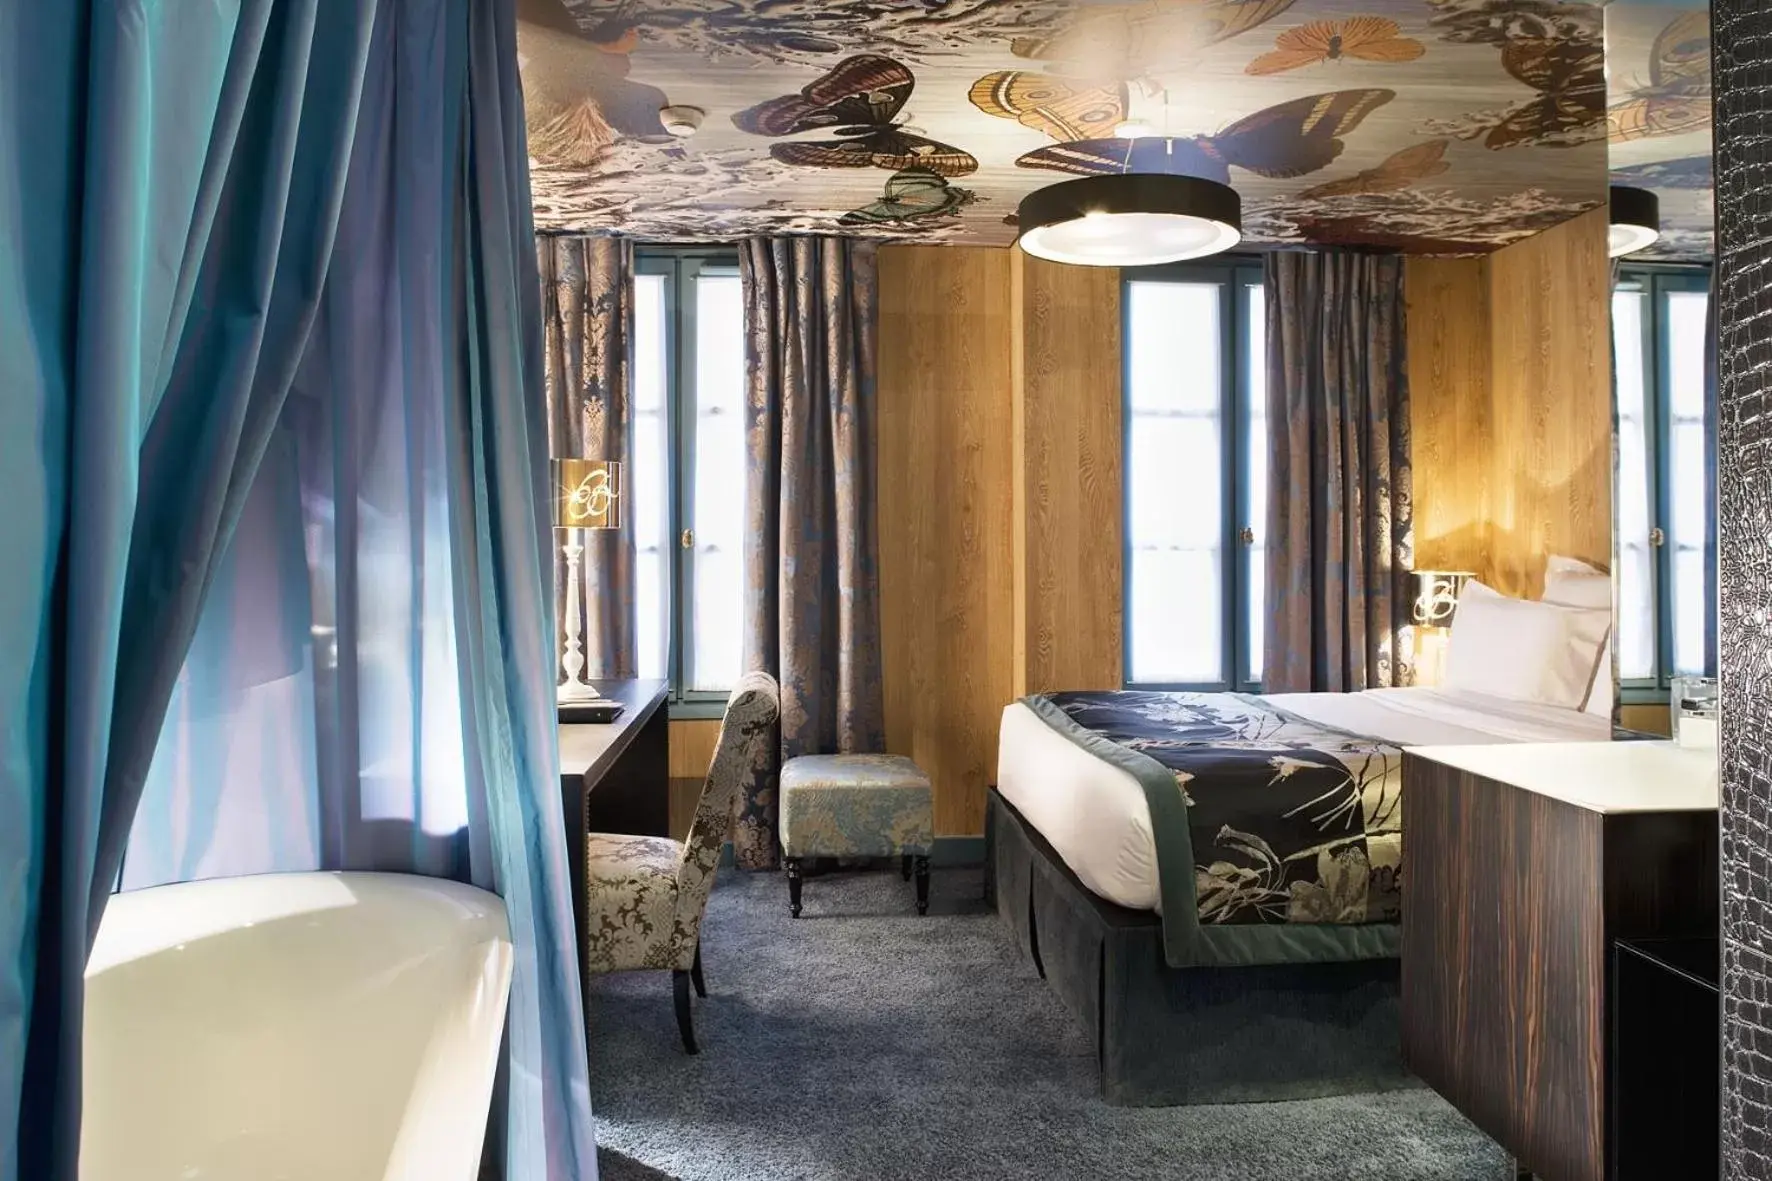 Photo of the whole room, Bathroom in Bellechasse Saint-Germain